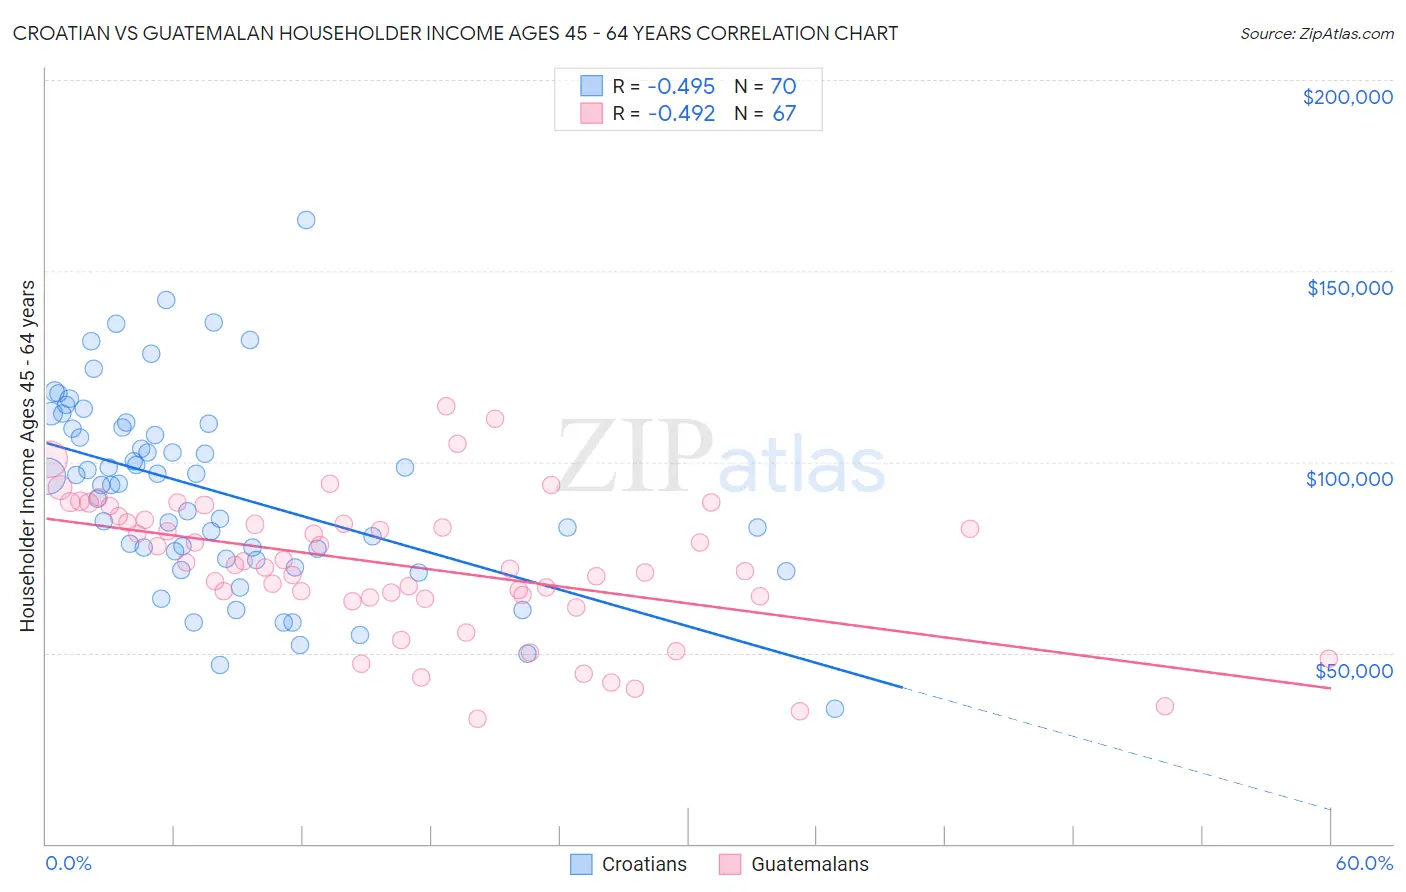 Croatian vs Guatemalan Householder Income Ages 45 - 64 years